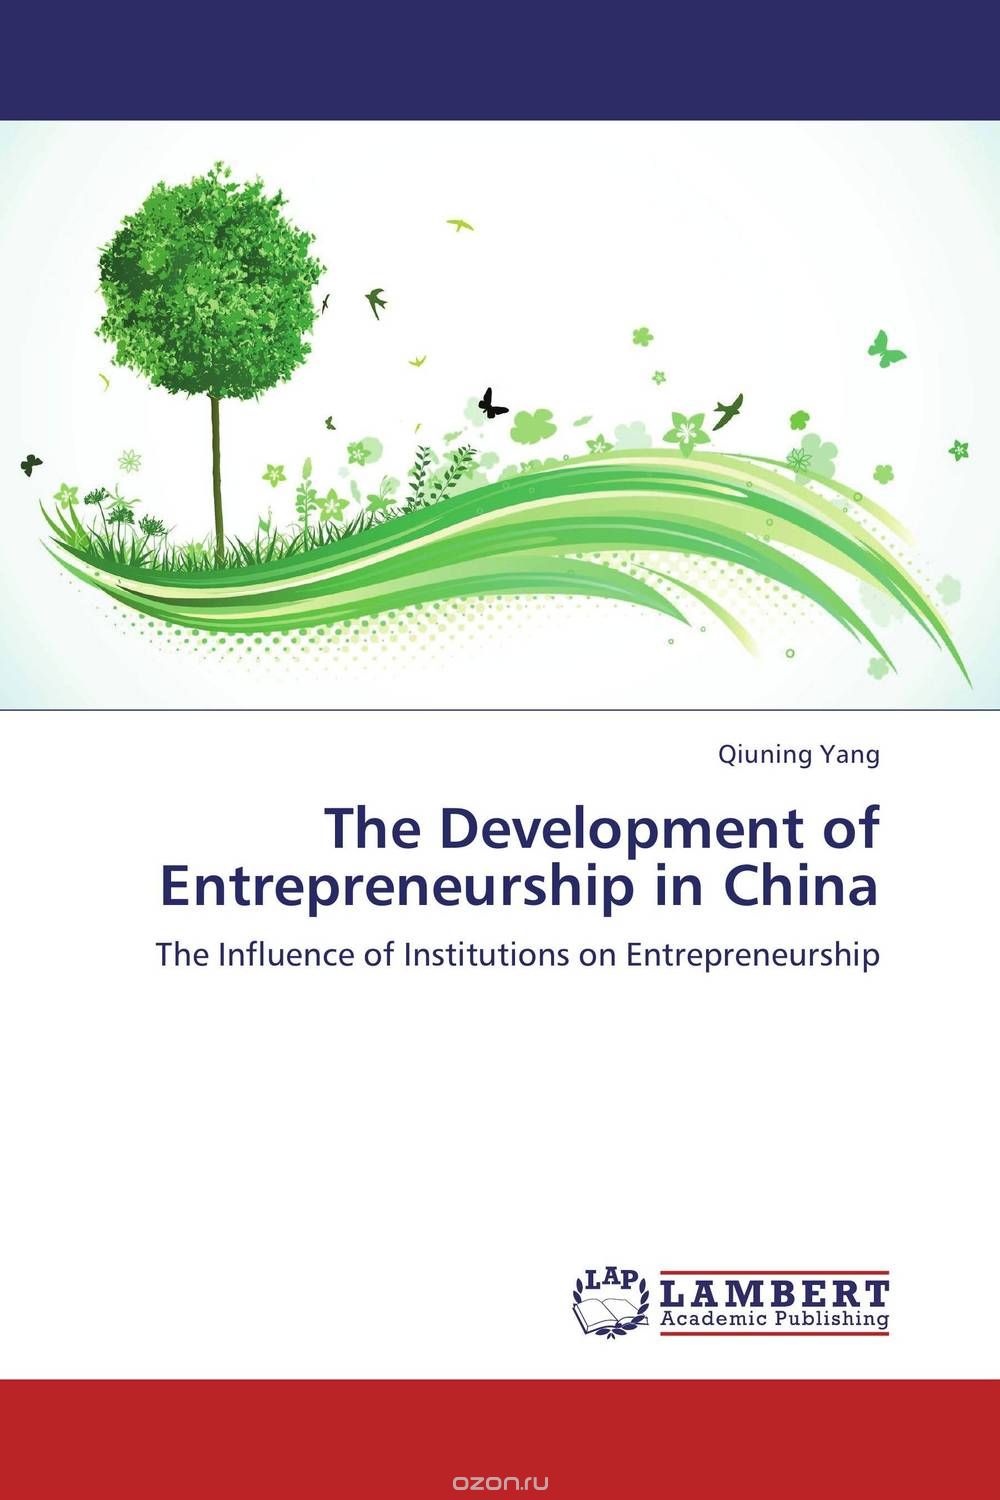 Скачать книгу "The Development of Entrepreneurship in China"